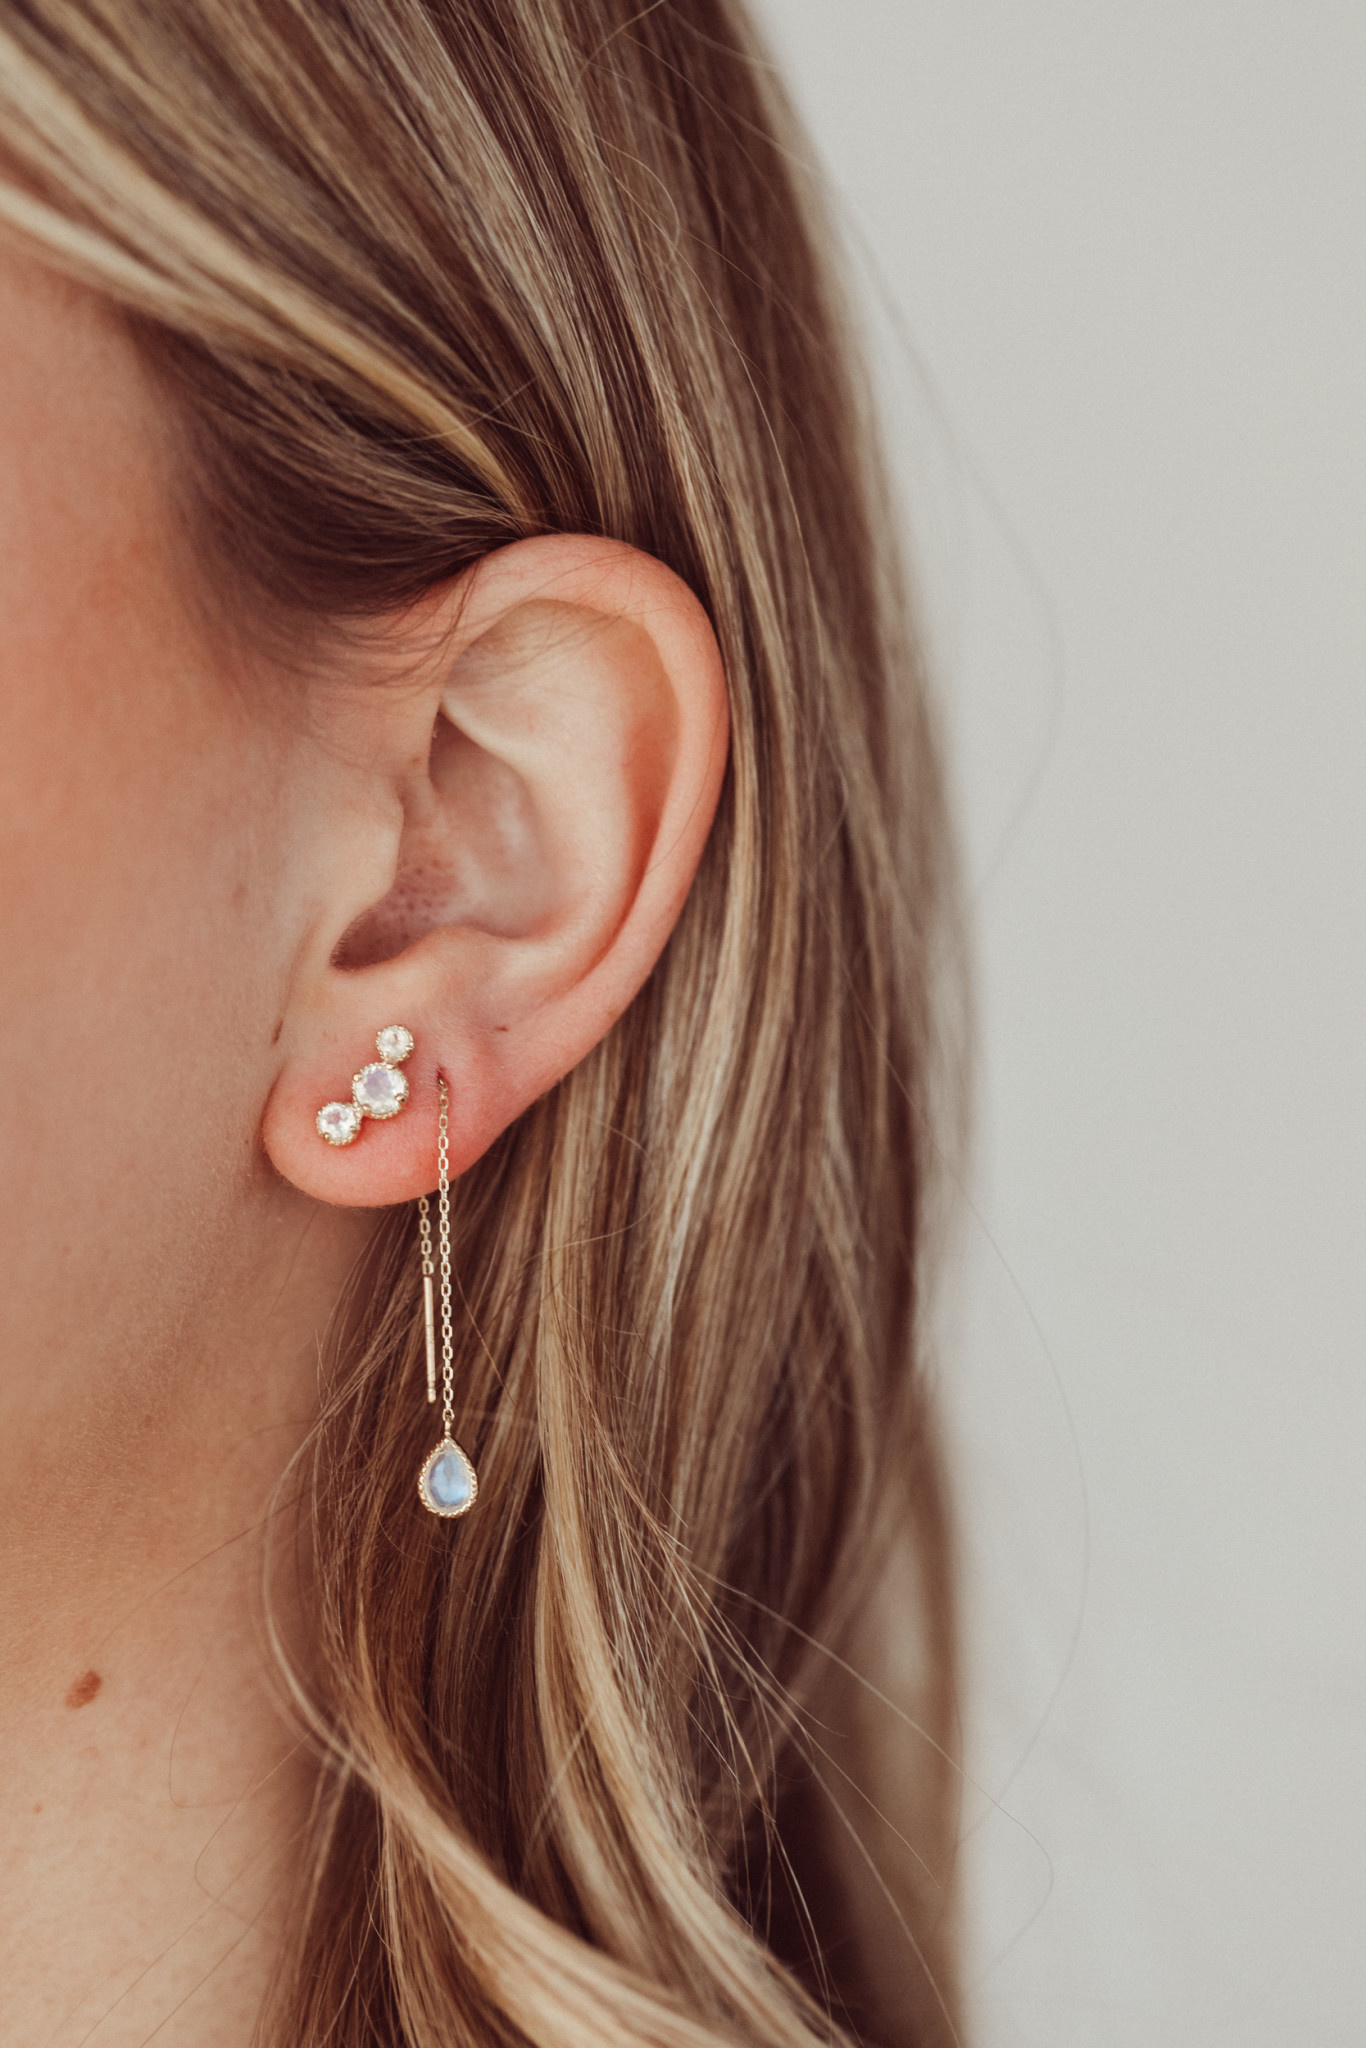 Details more than 109 rainbow earrings argos super hot